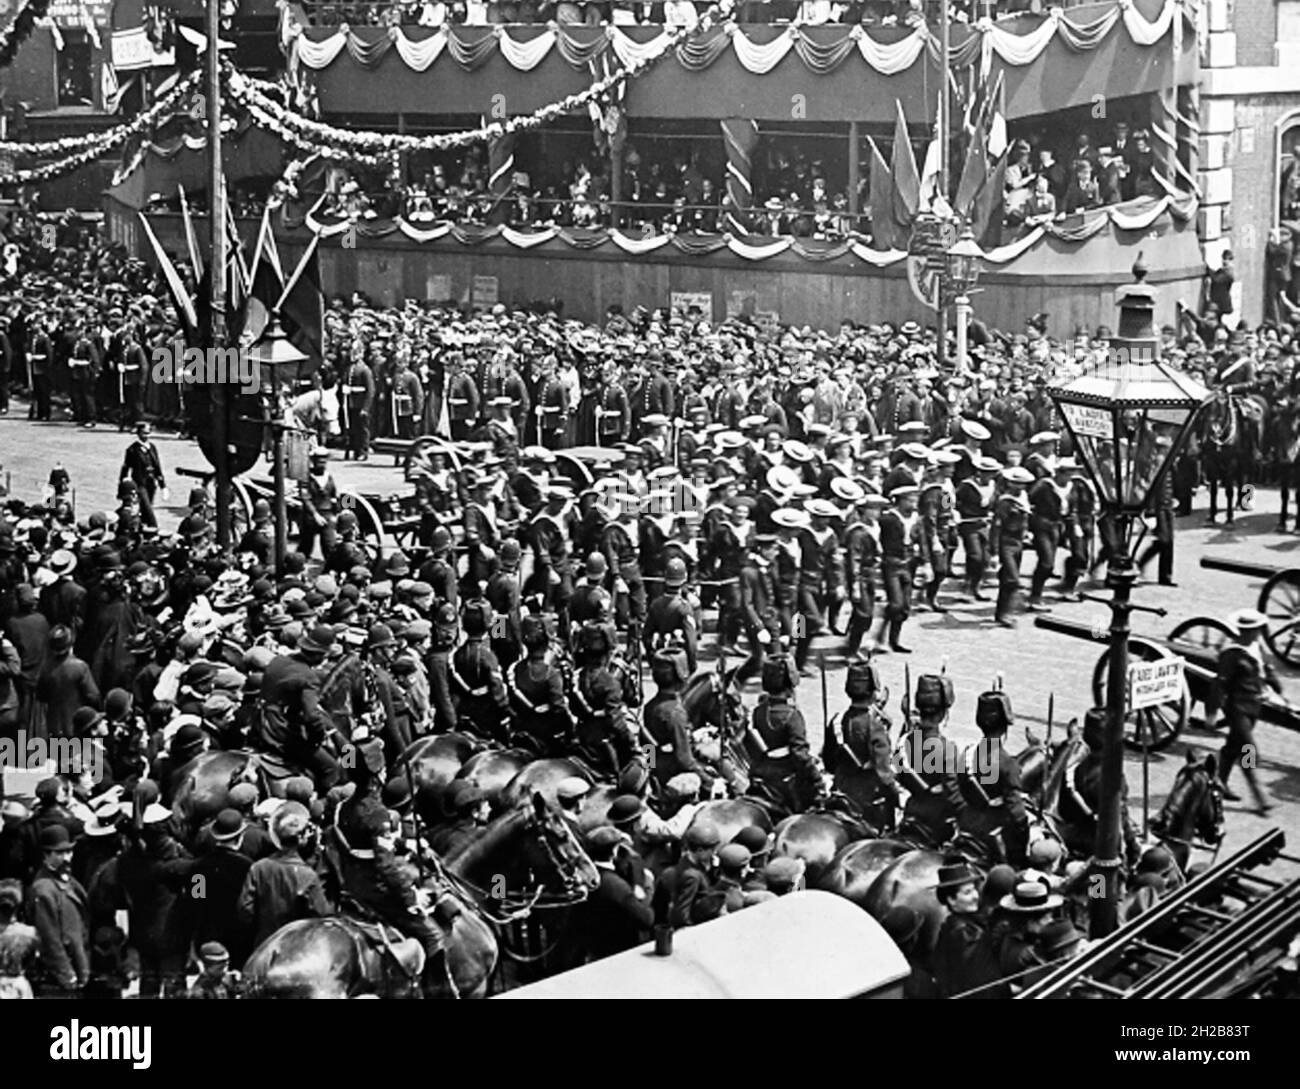 The Naval Detachment, Queen Victoria's Diamond Jubilee parade, London in 1897 Stock Photo